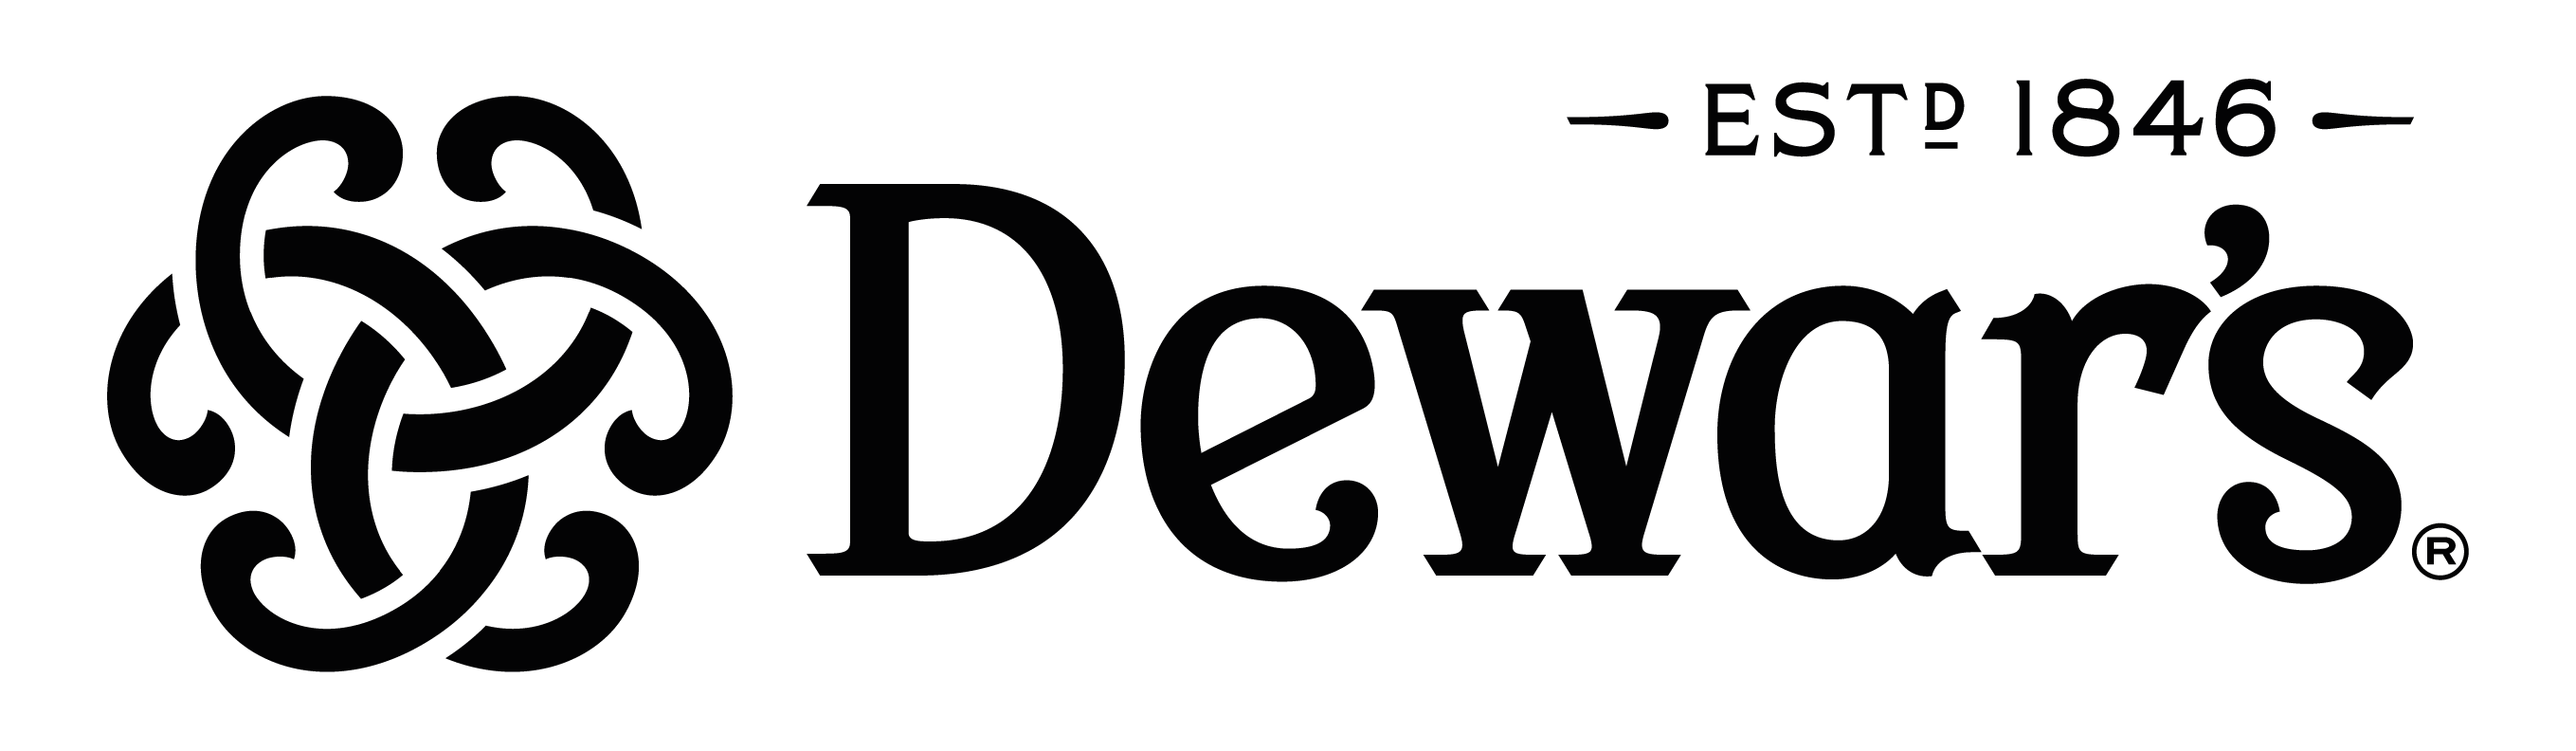 Dewar S Logo Logodix